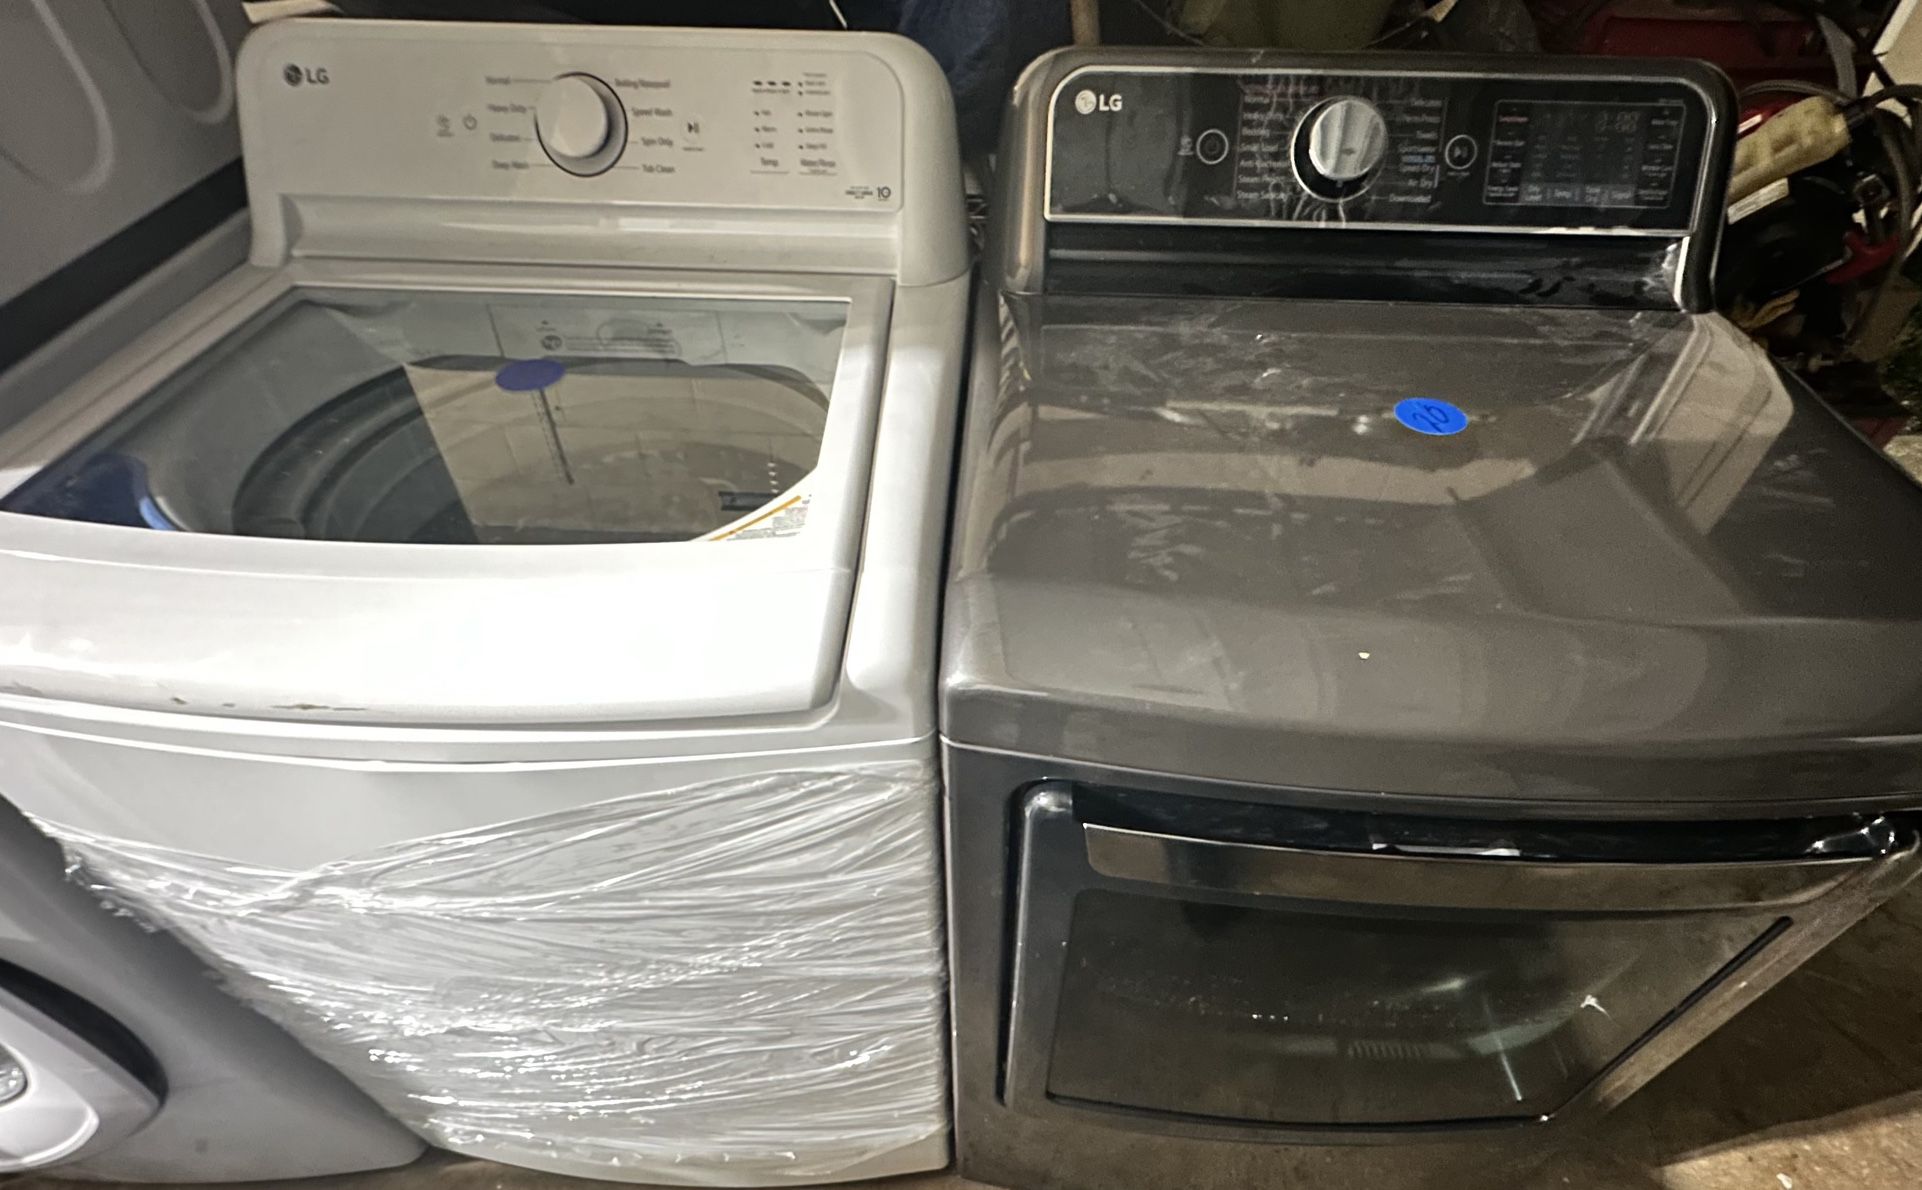 LG Washer & Dryer Set